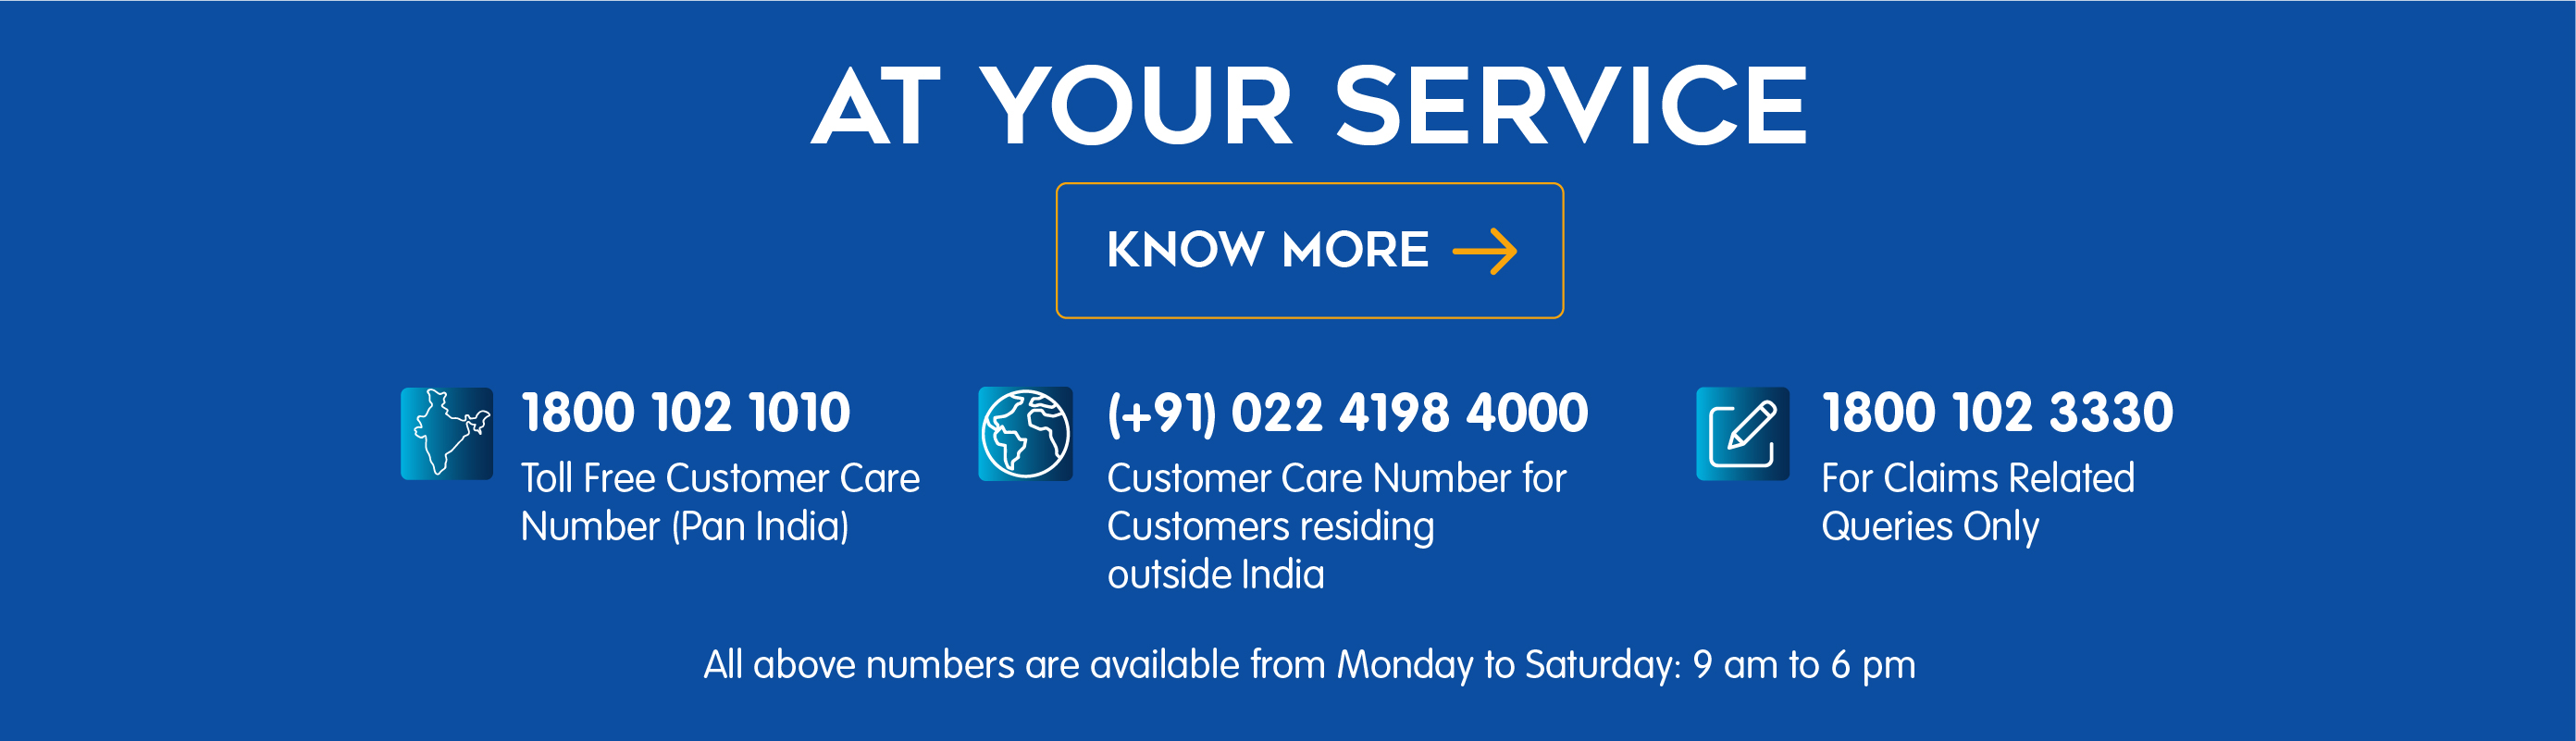 Rnli Customer Service Numbers